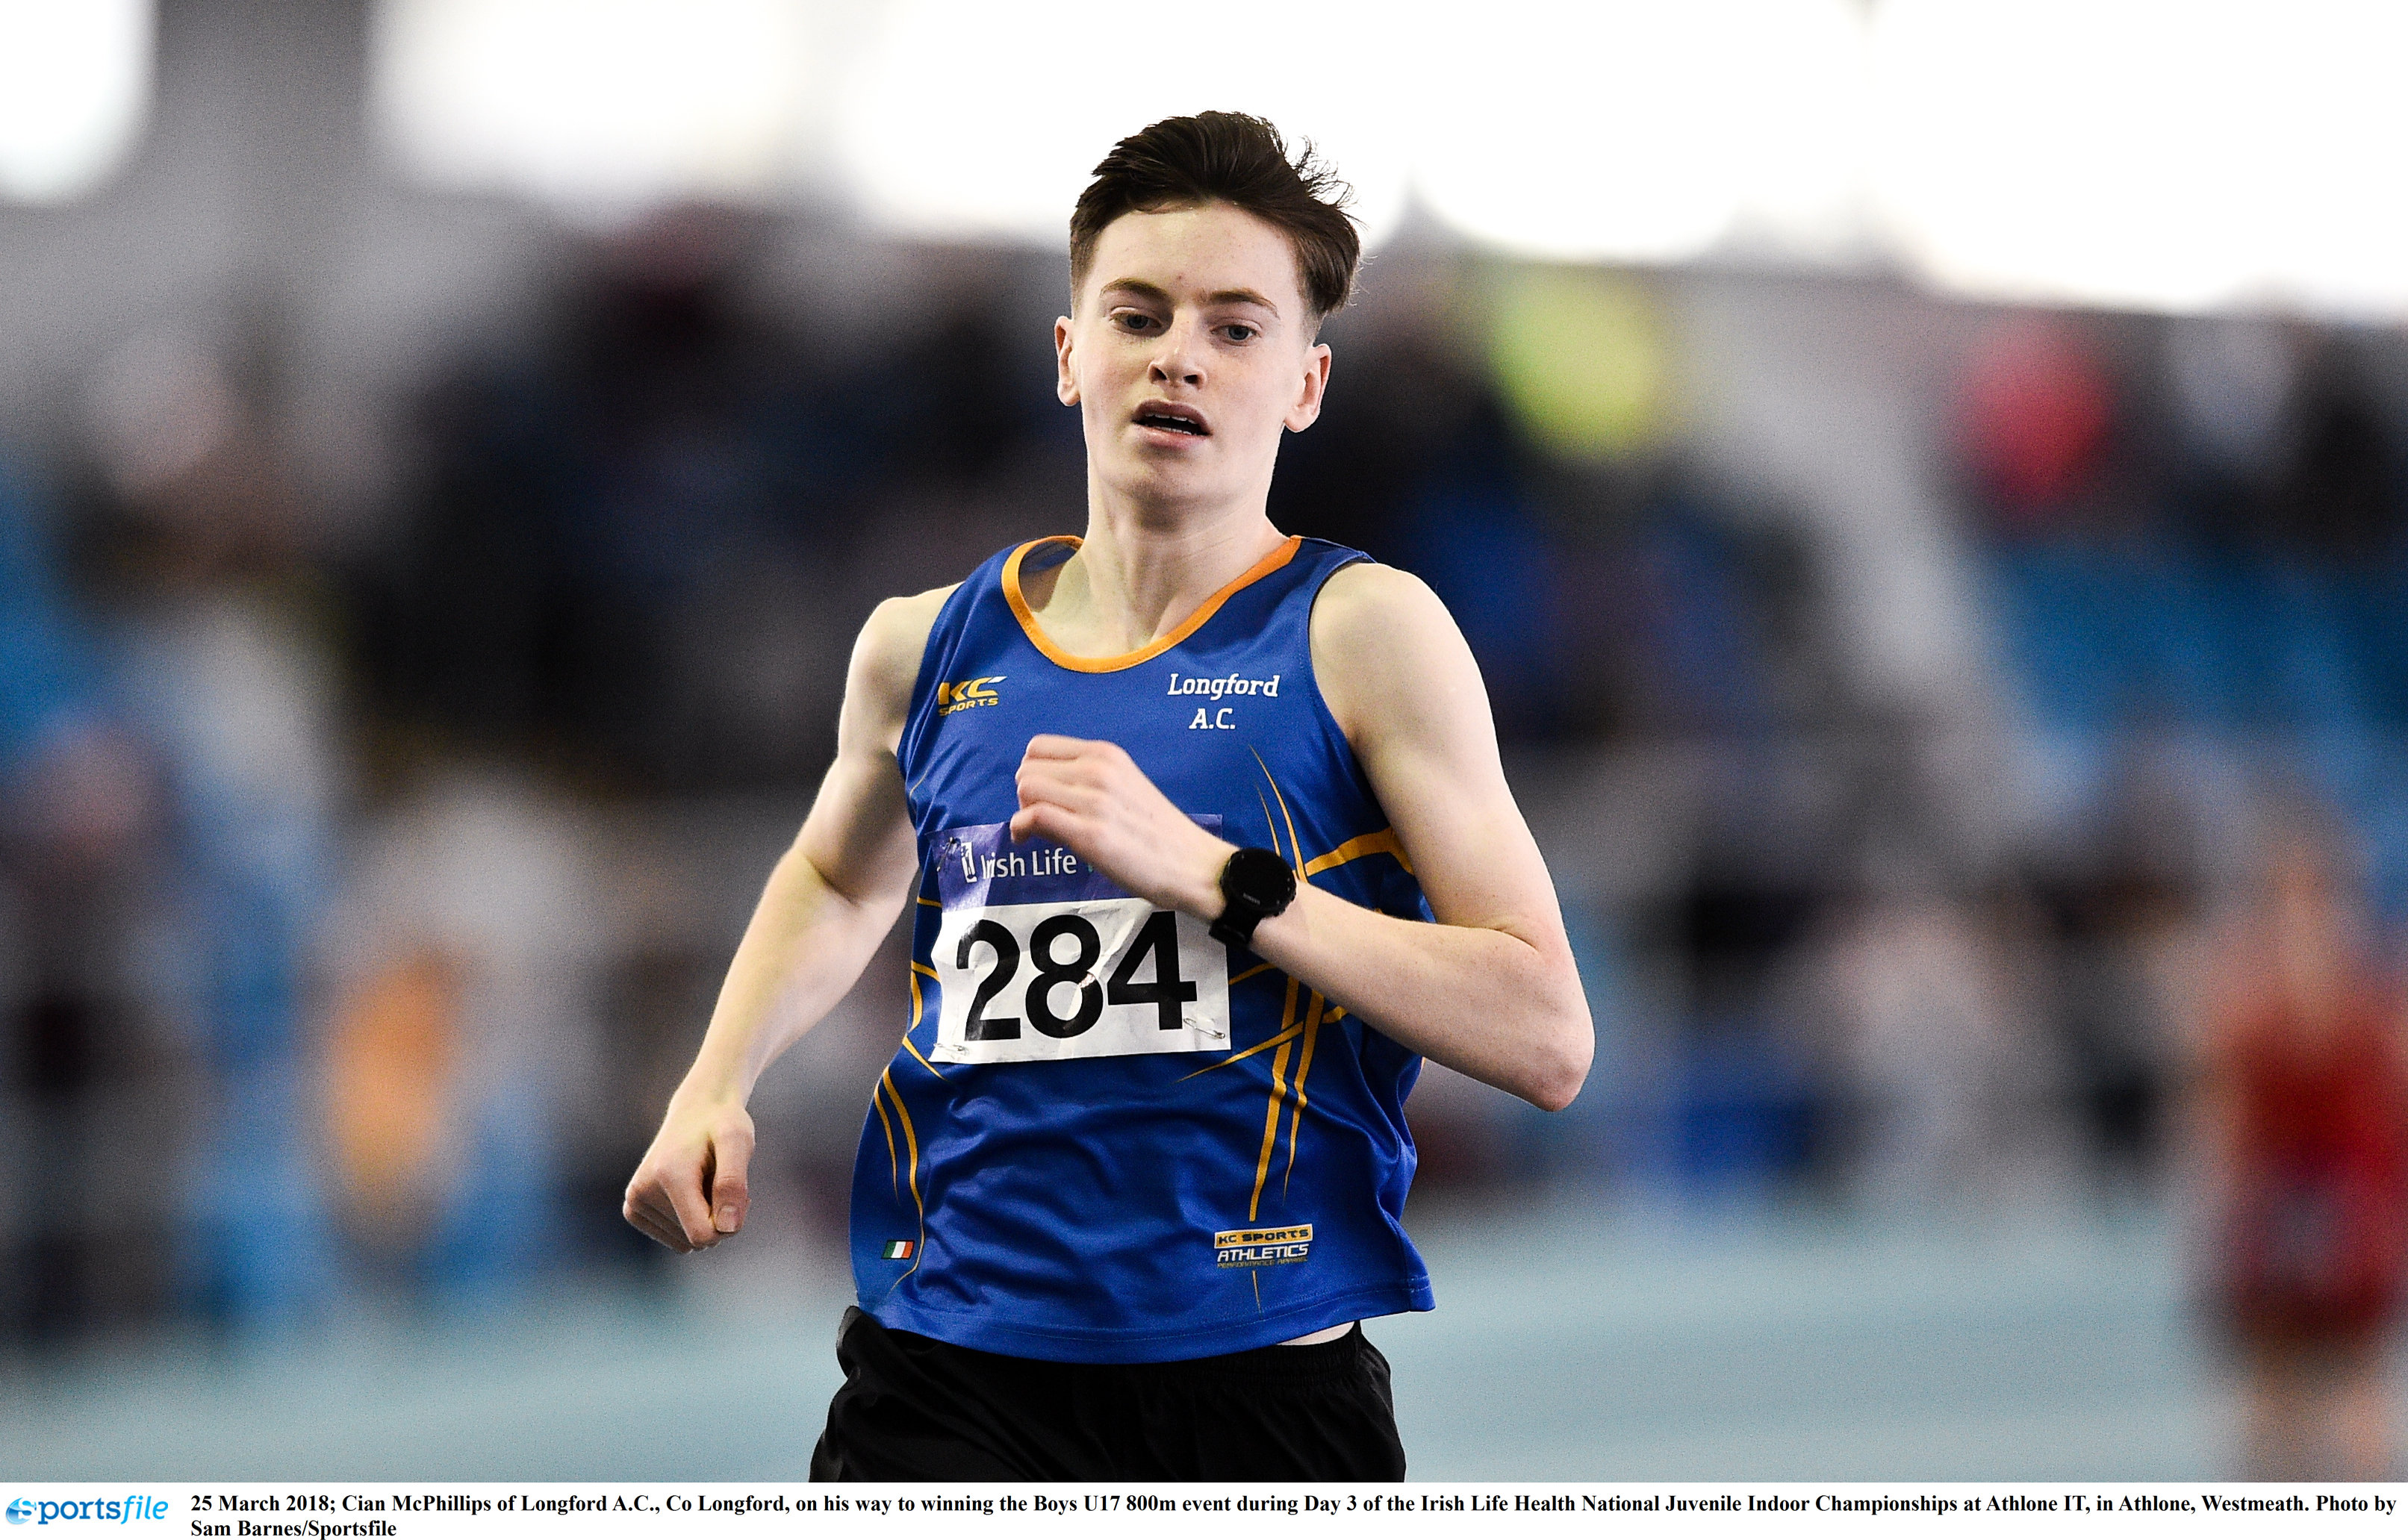 Cian McPhillips, the new Irish Junior 1500m Indoor record holder